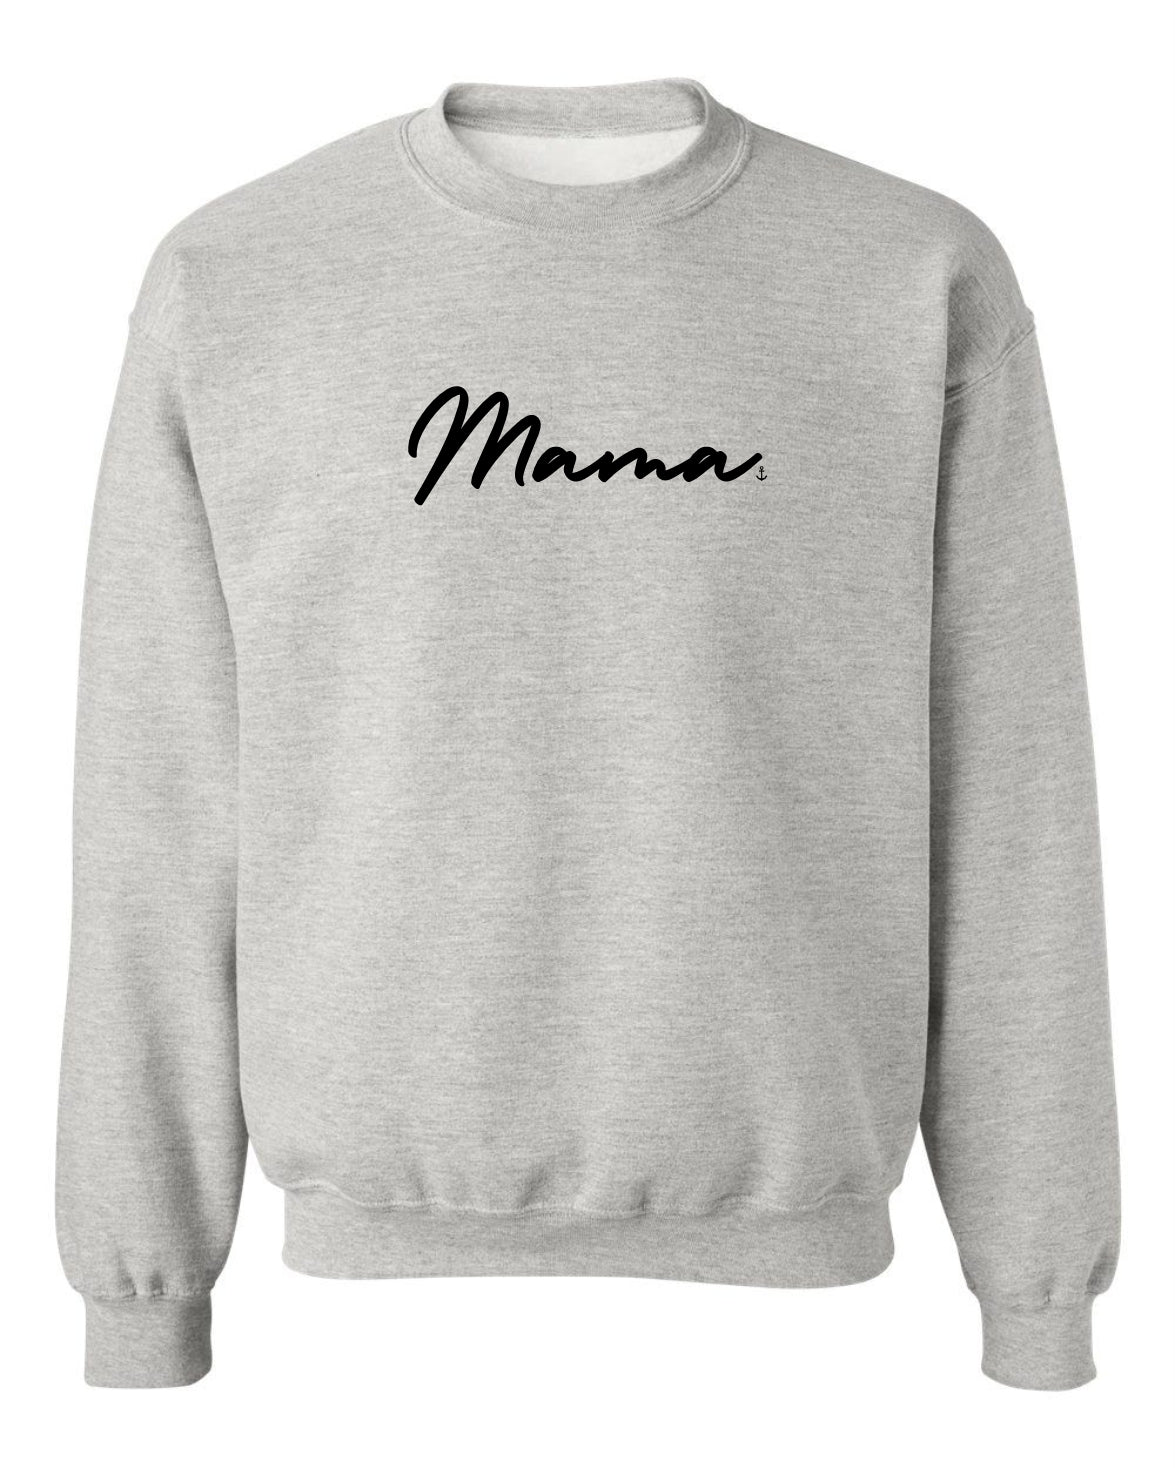 "Mama" Unisex Crewneck Sweatshirt